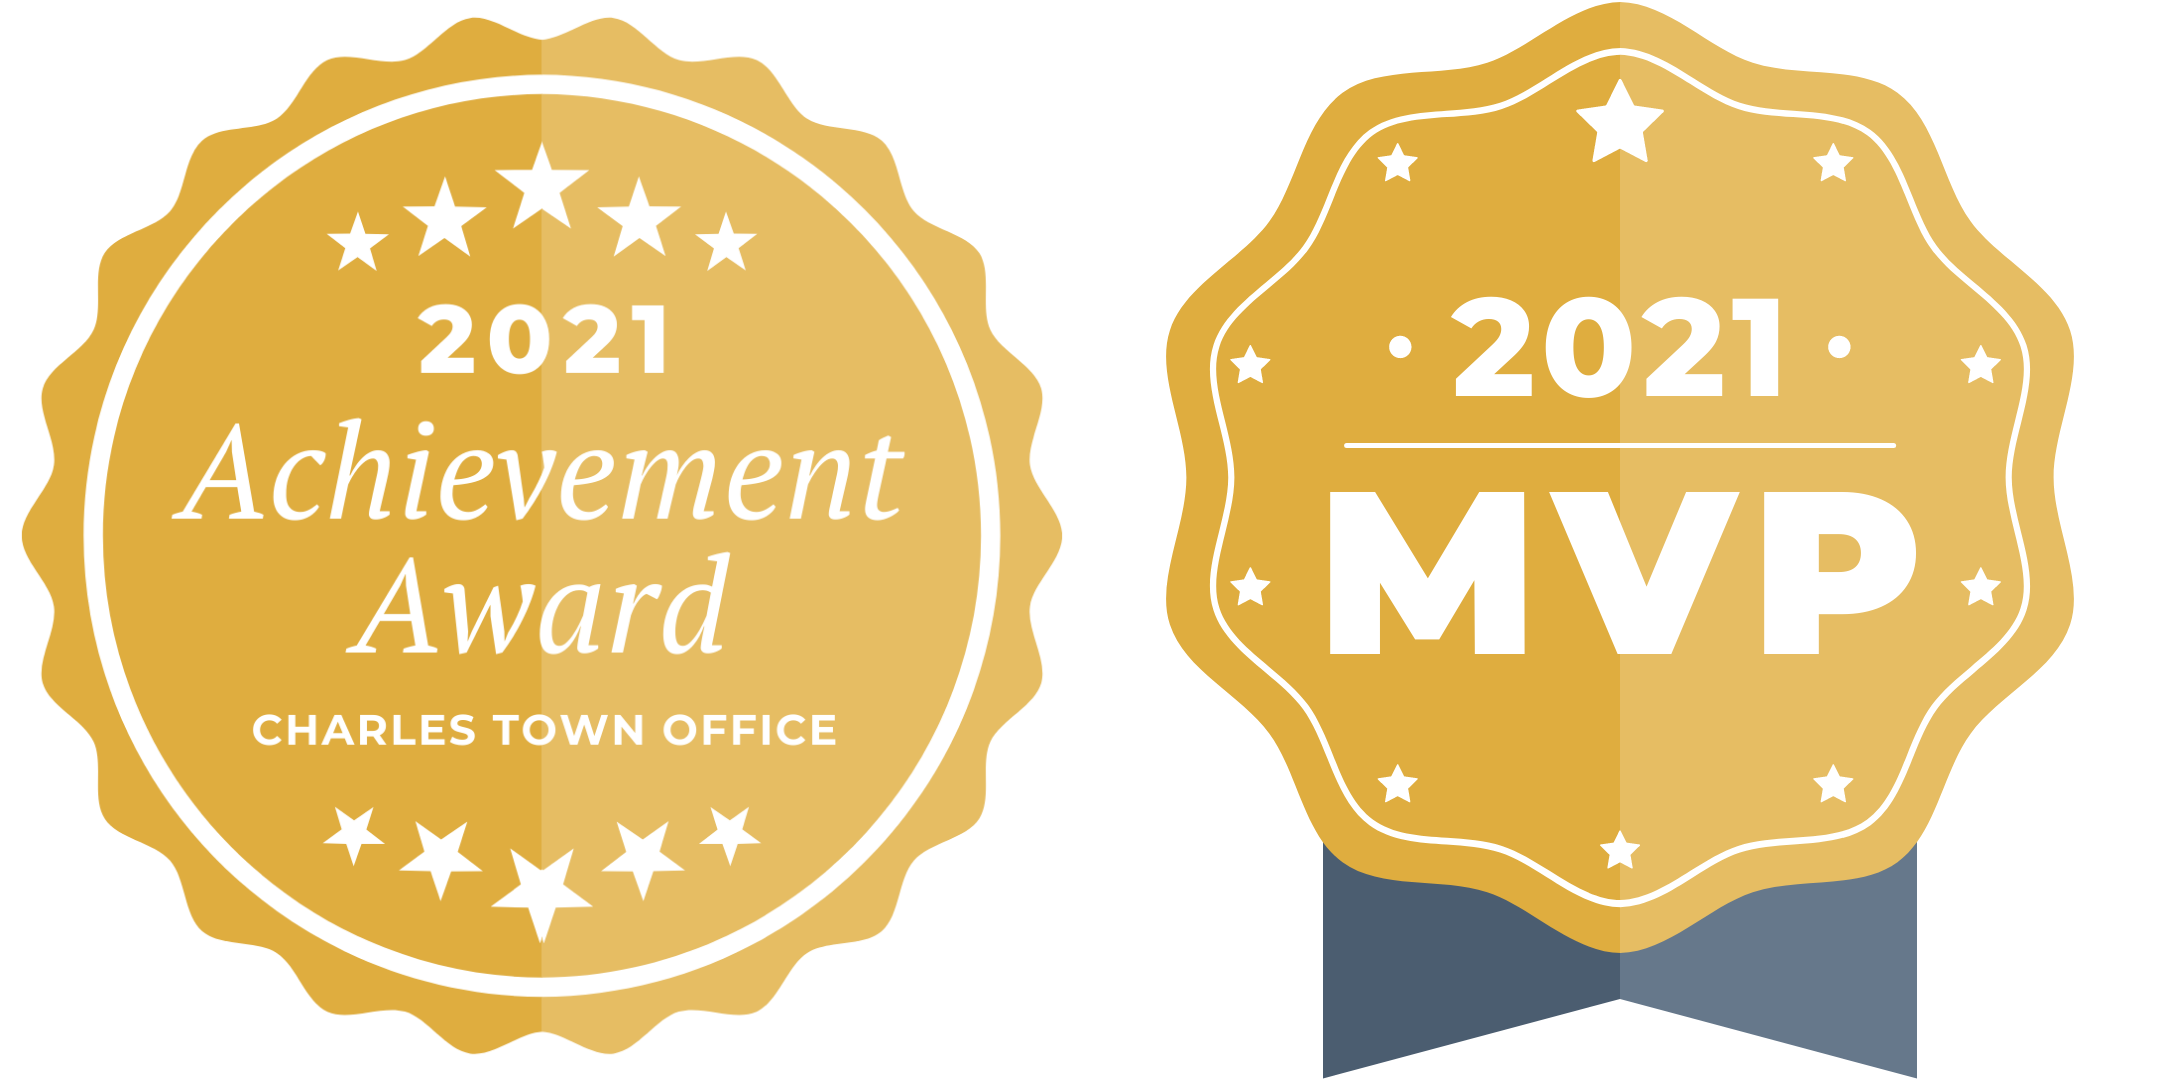 2021 Achievement Award - Charles Town Office & MVP